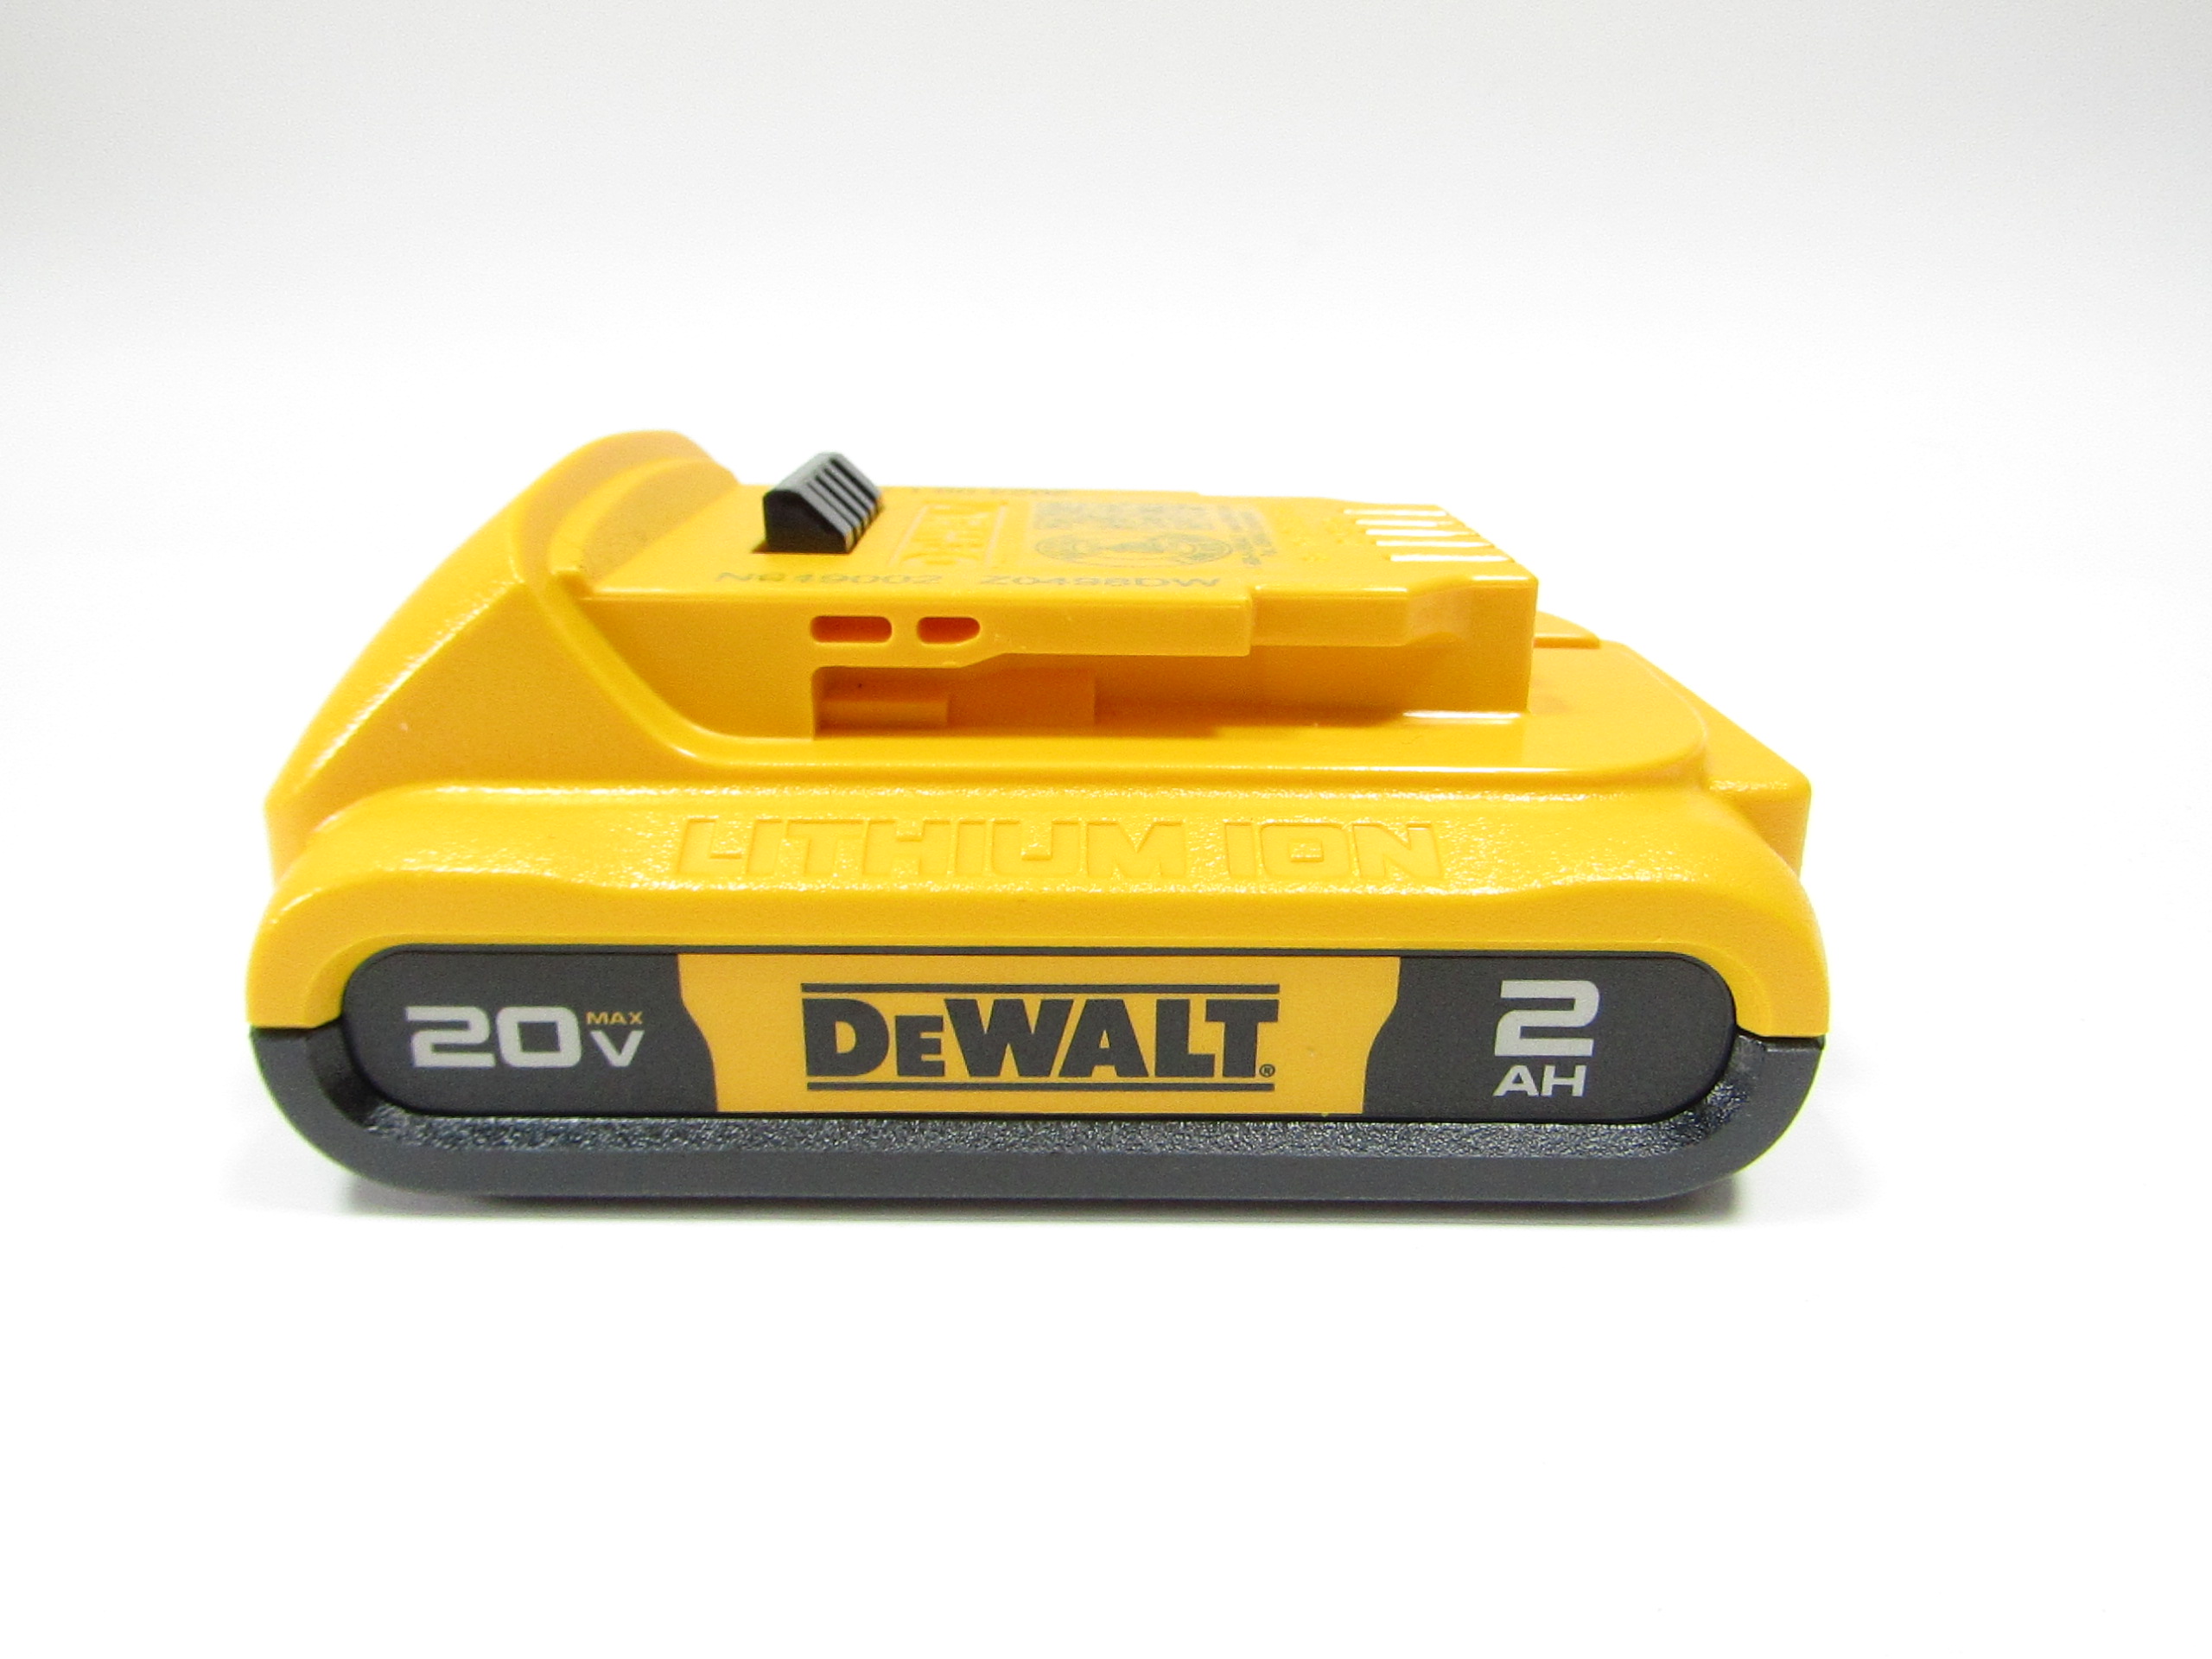 Dewalt - DCD791D2 - Cordless Drill / Driver Kit - 20V MAX - 1/2-Inch–  Wholesale Home